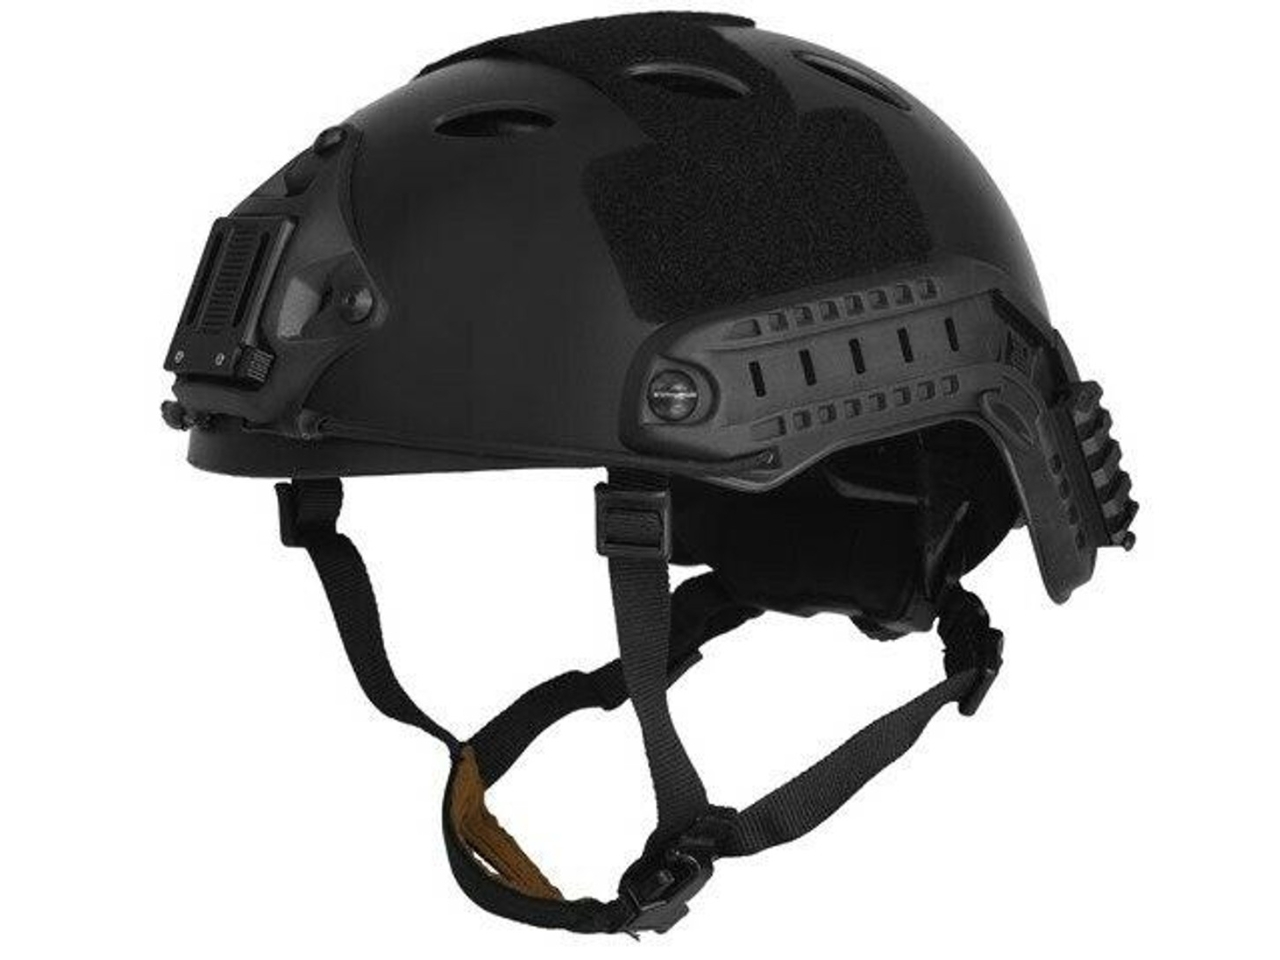 Lancer Tactical SpecOps Military Style Helmet, Black